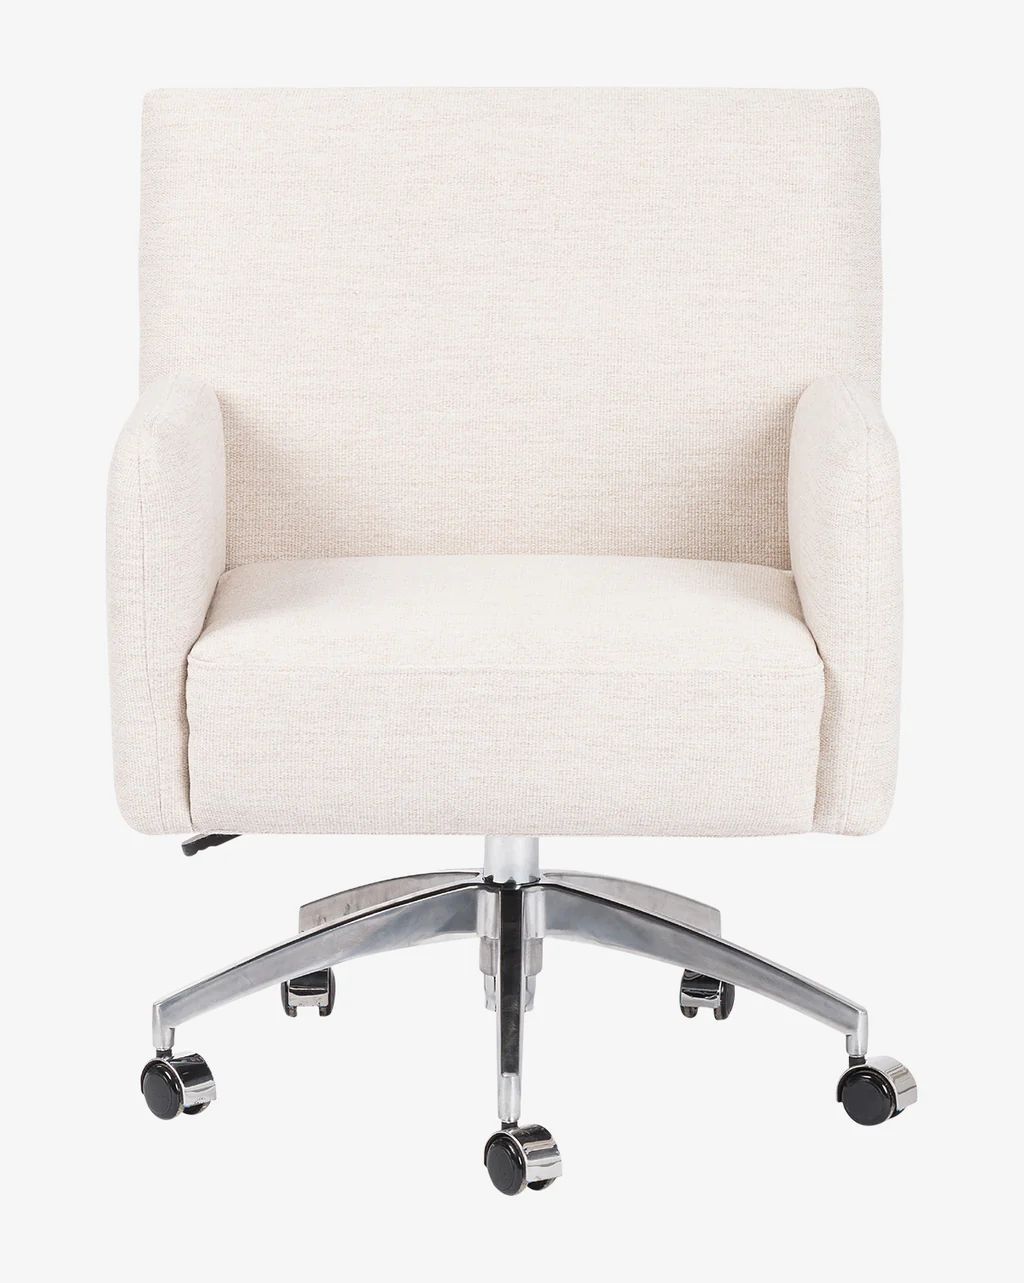 Kenzo Desk Chair | McGee & Co.